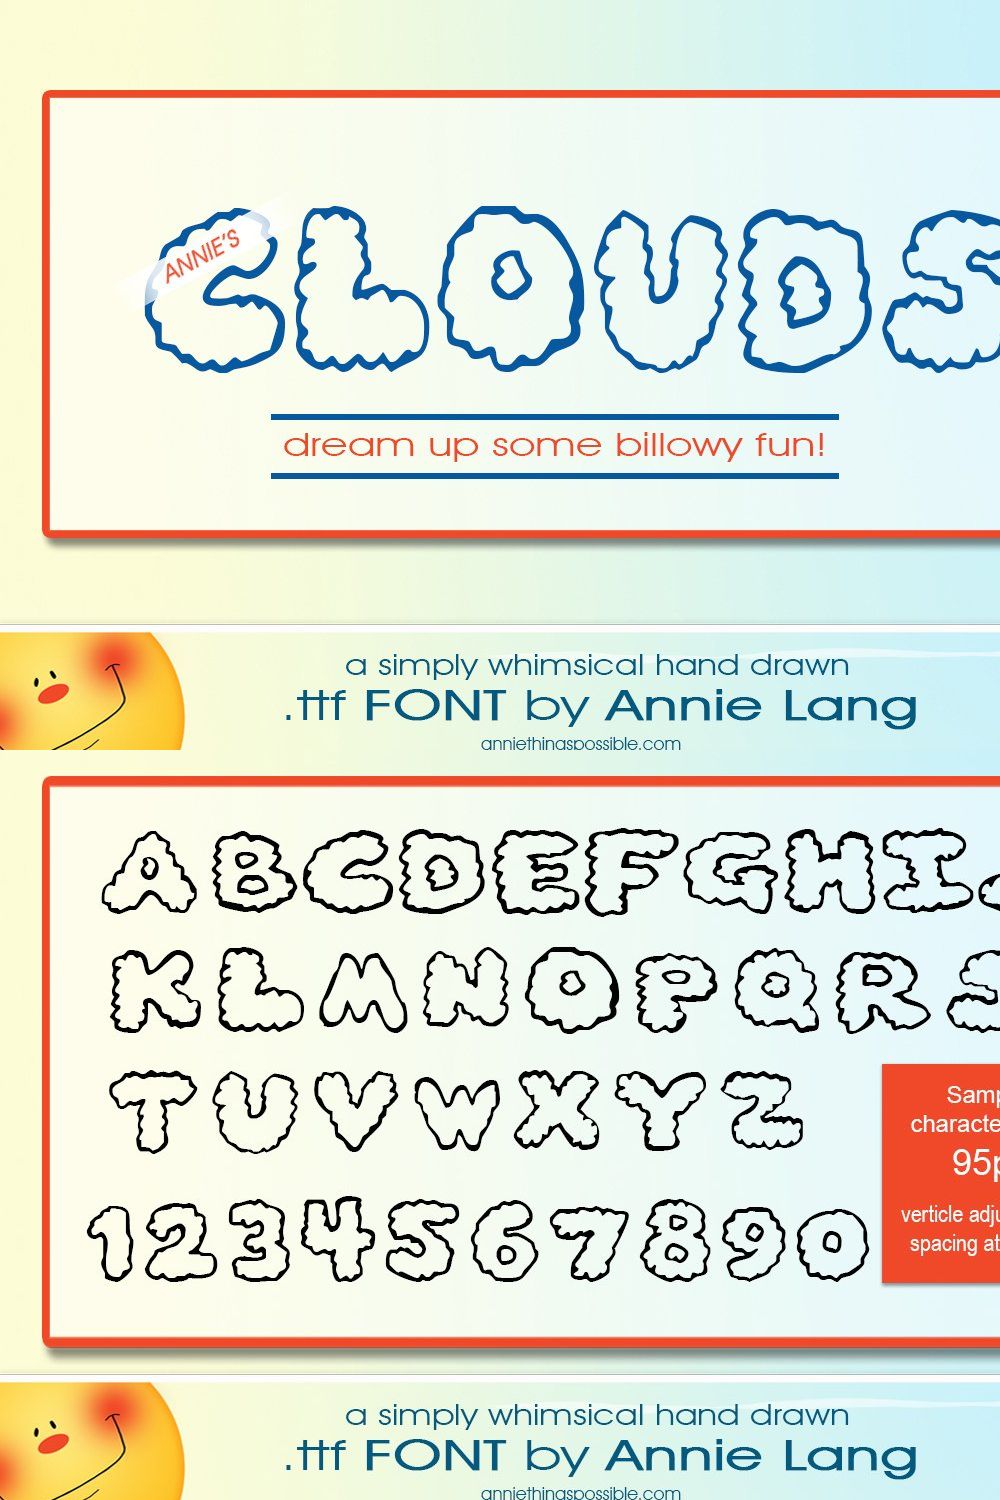 Annie's Clouds Font pinterest preview image.